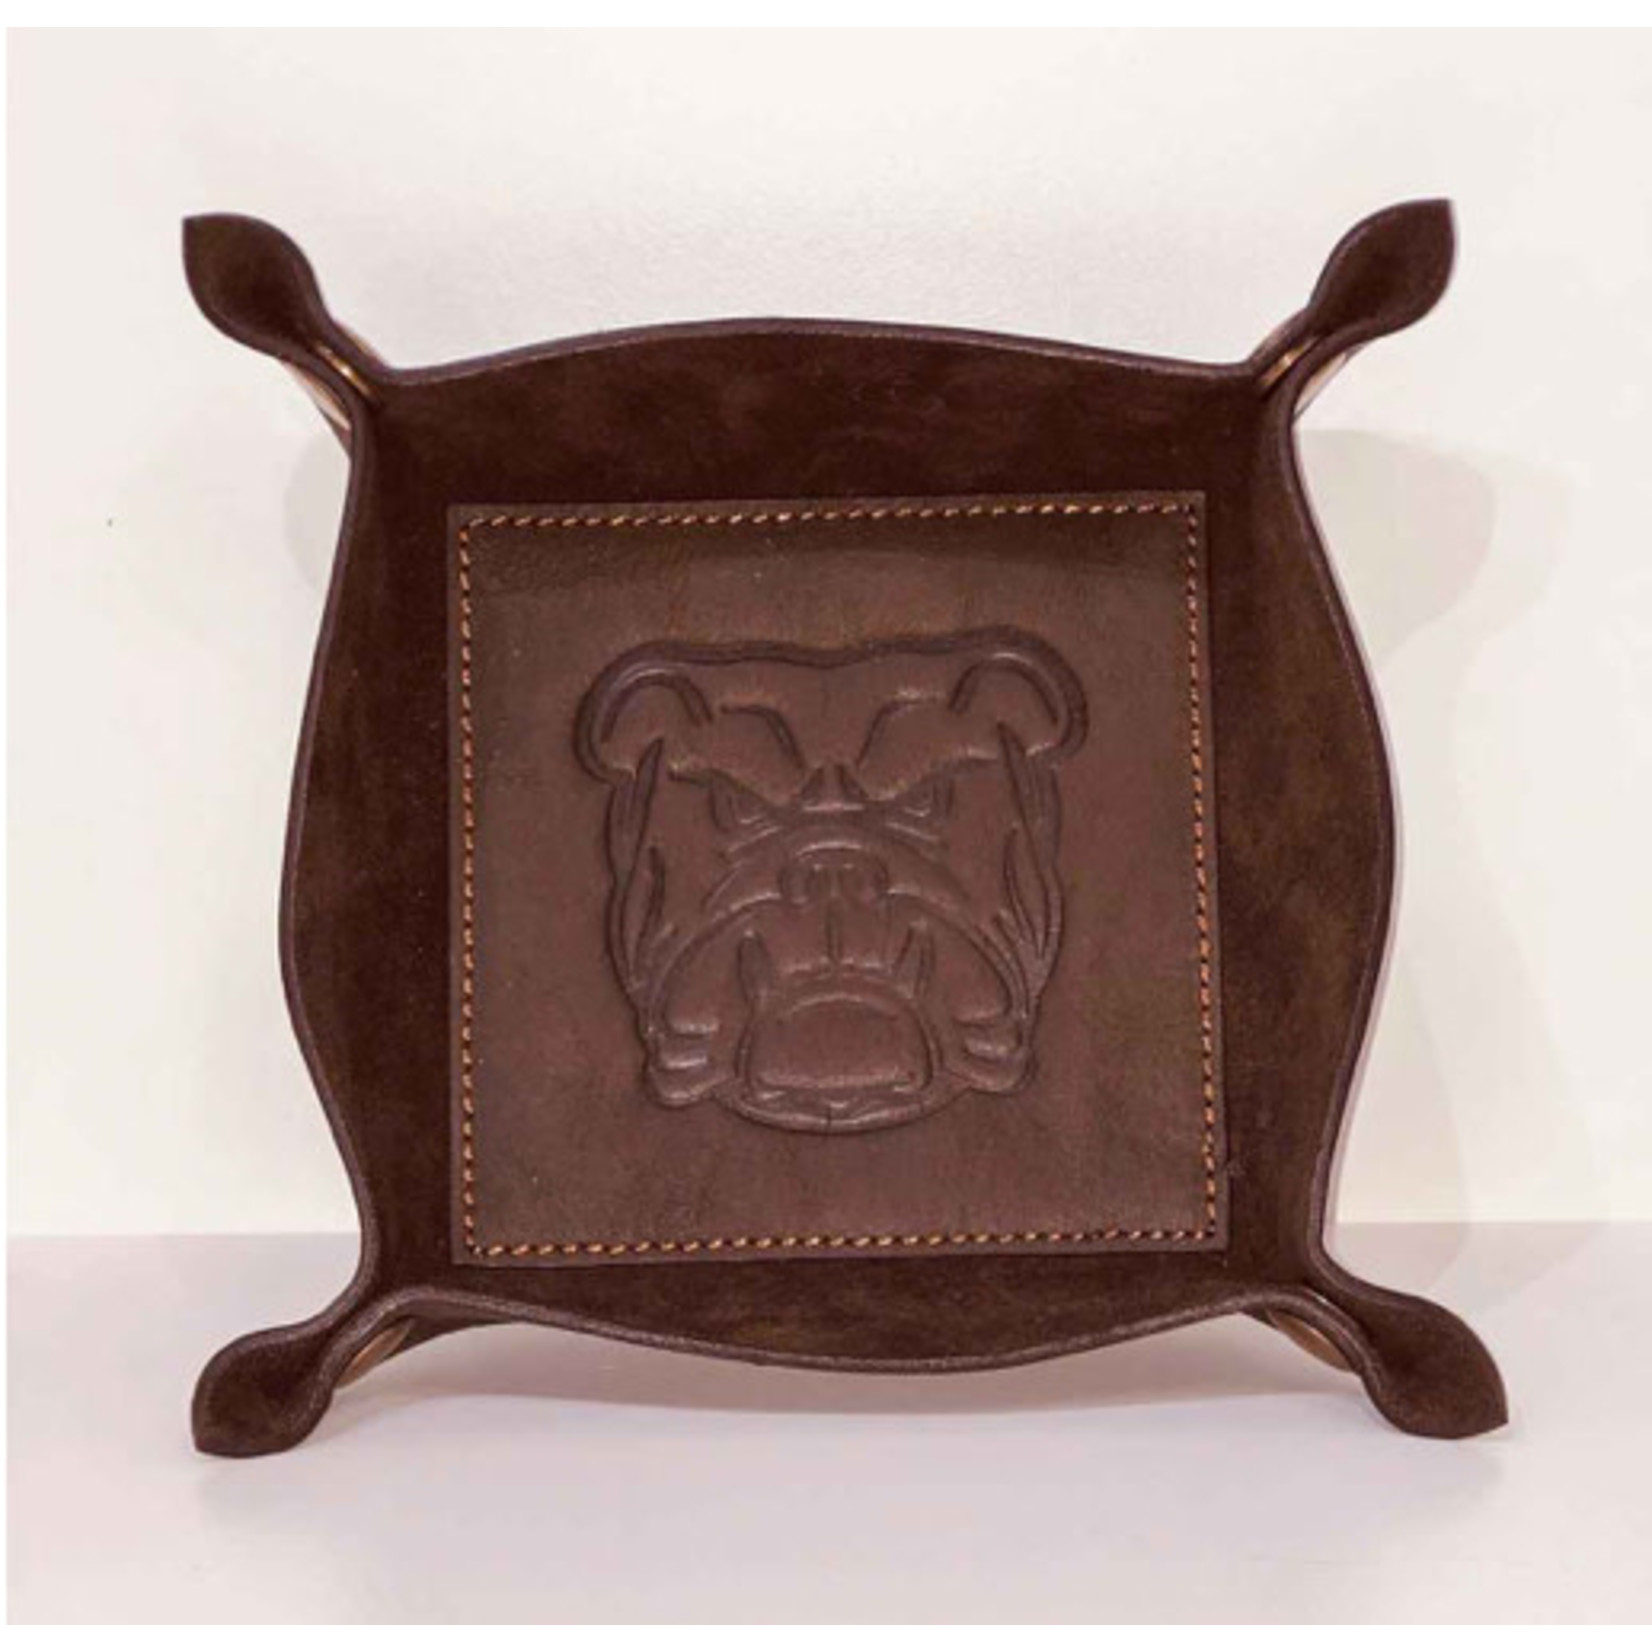 The Royal Standard Bulldog Embossed Leather Valet Tray Dark Brown